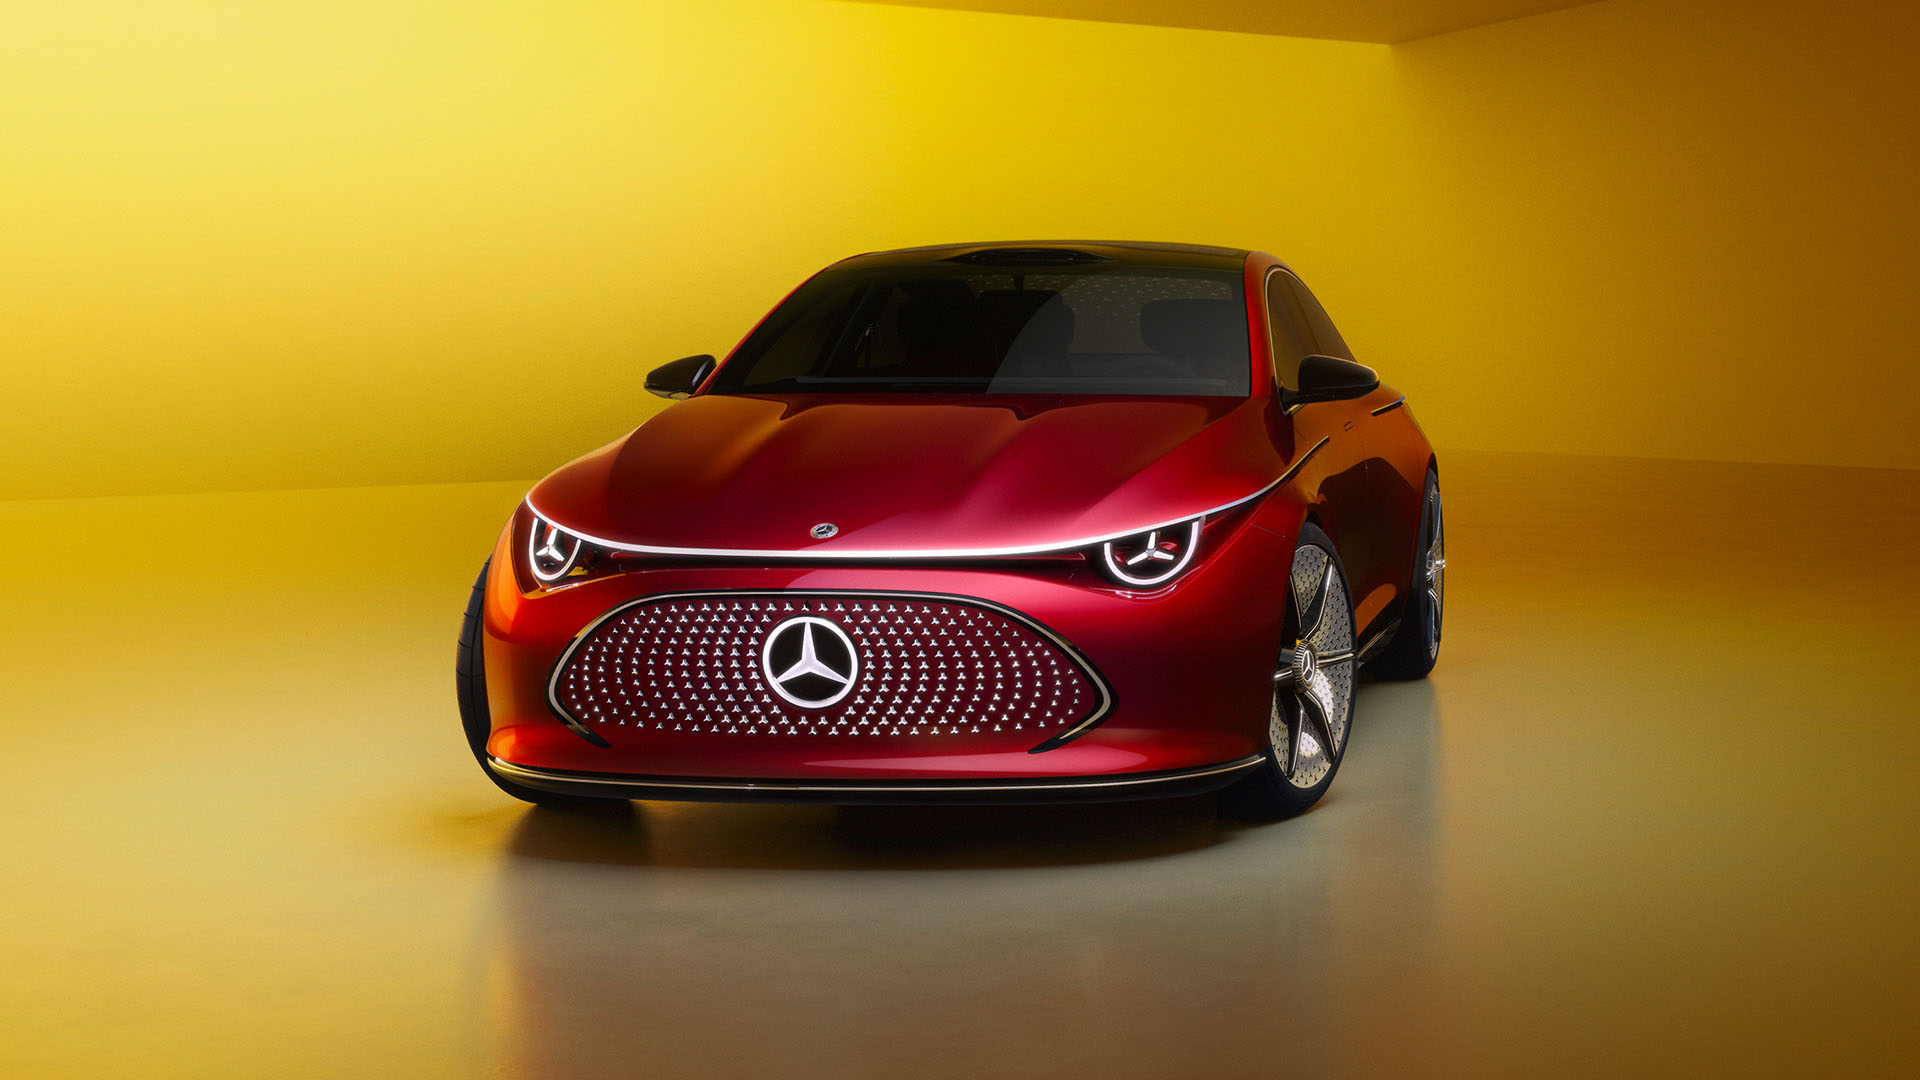 BMW, Mercedes reveal electric concept cars: Specs, features, details